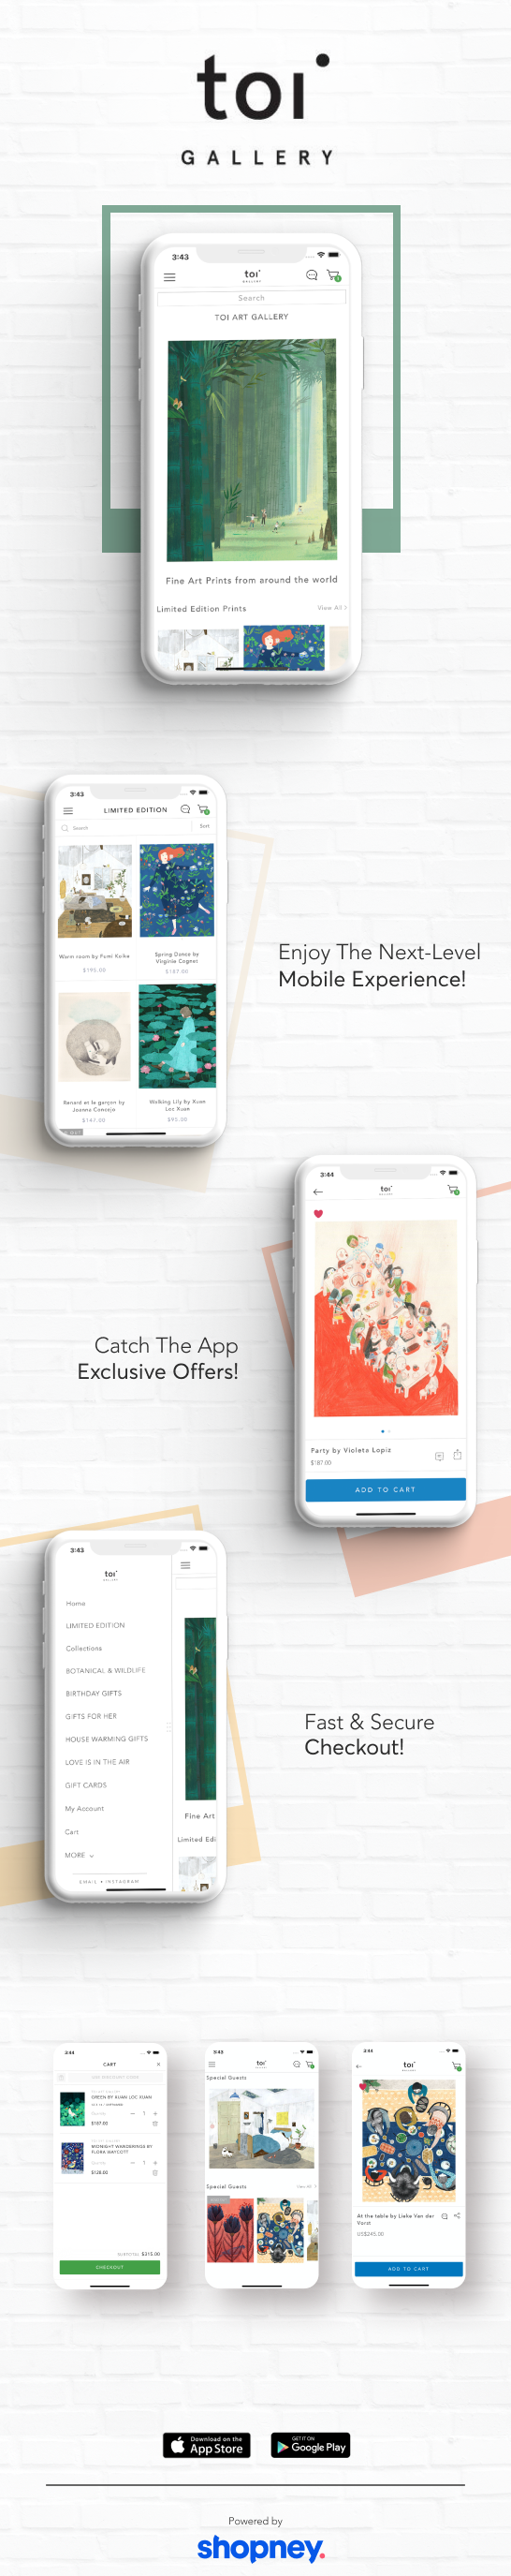 the mobile app design of Toi Art Gallery app